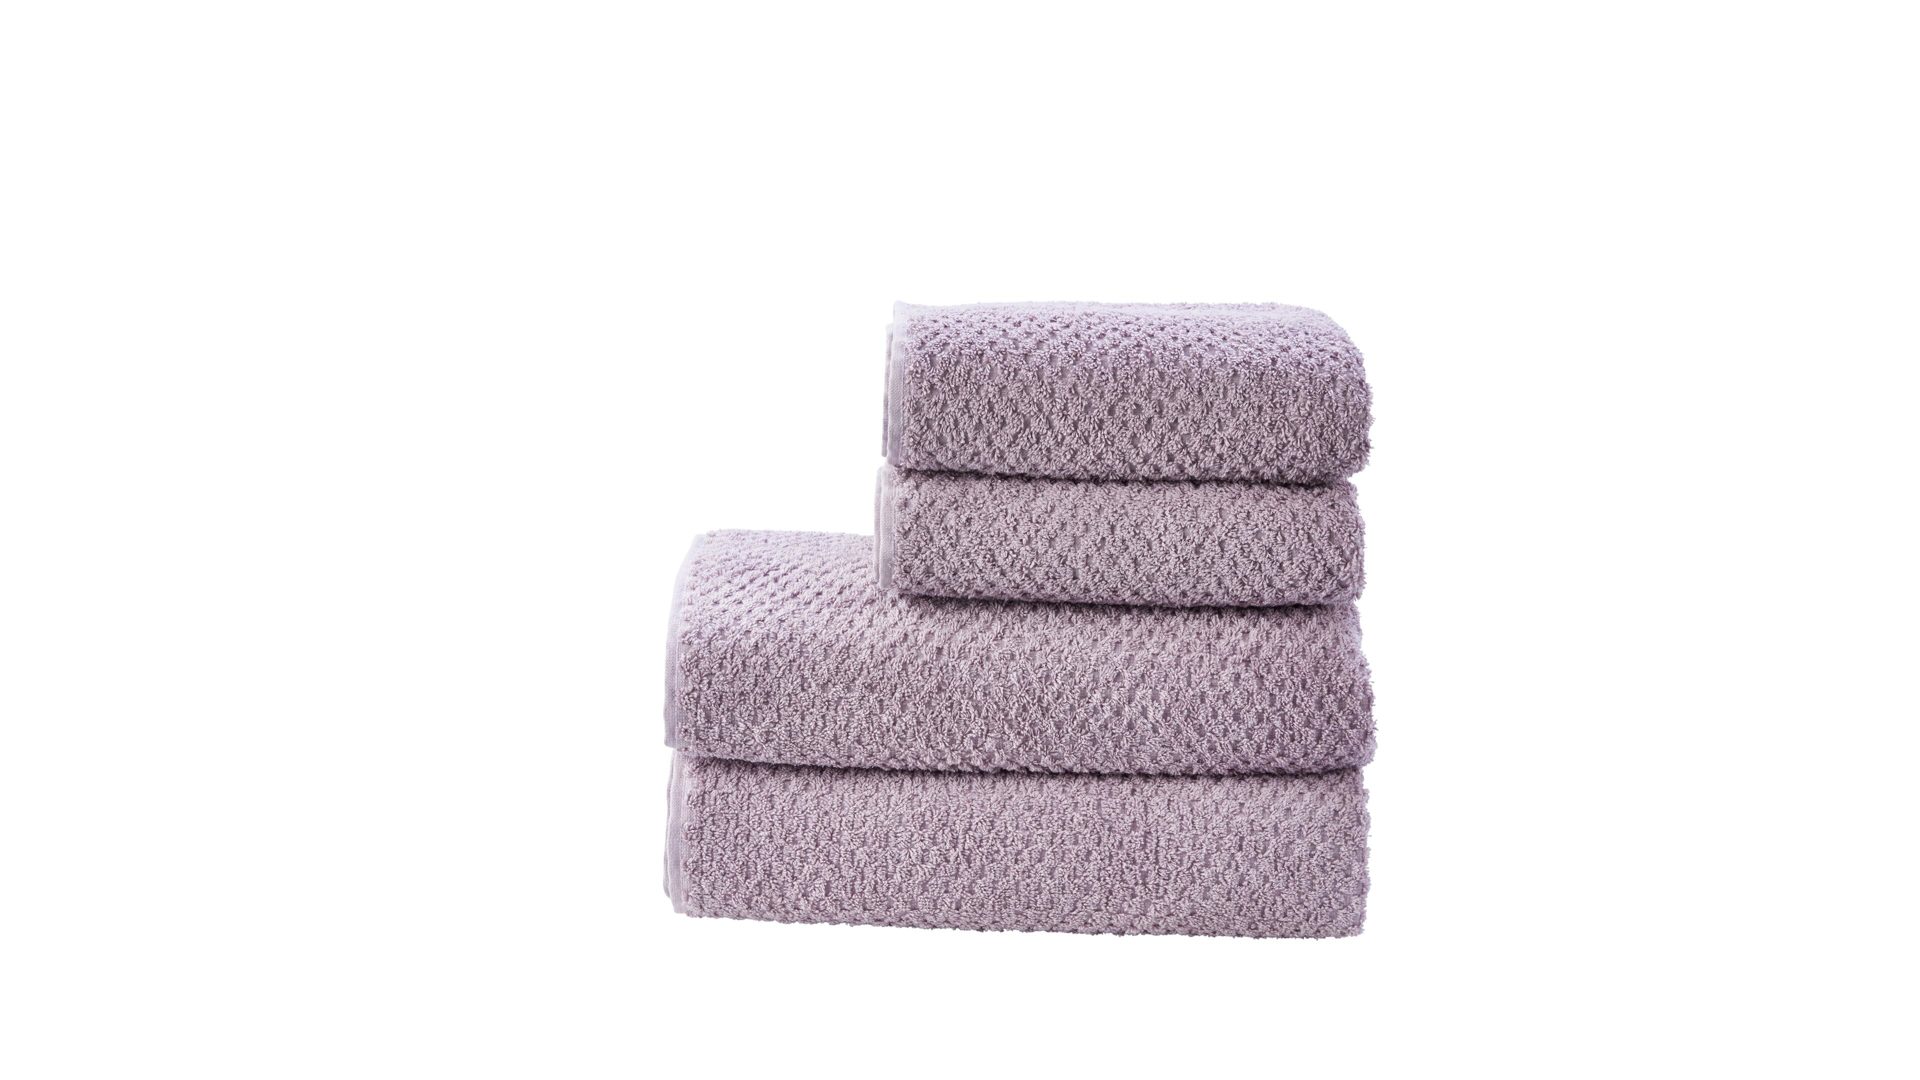 Handtuch-Set Done® by karabel home company aus Stoff in Pastellfarben DONE® Handtuch-Set Provence Honeycomb altrosafarbene Baumwolle  – vierteilig